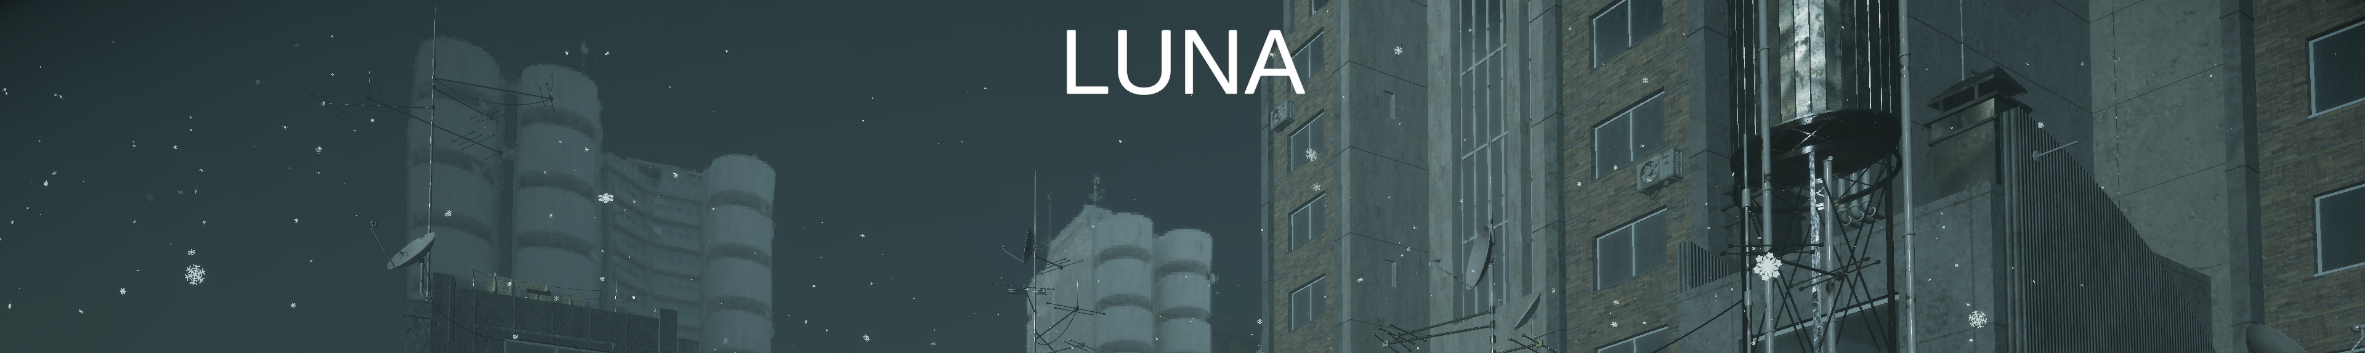 Project Luna